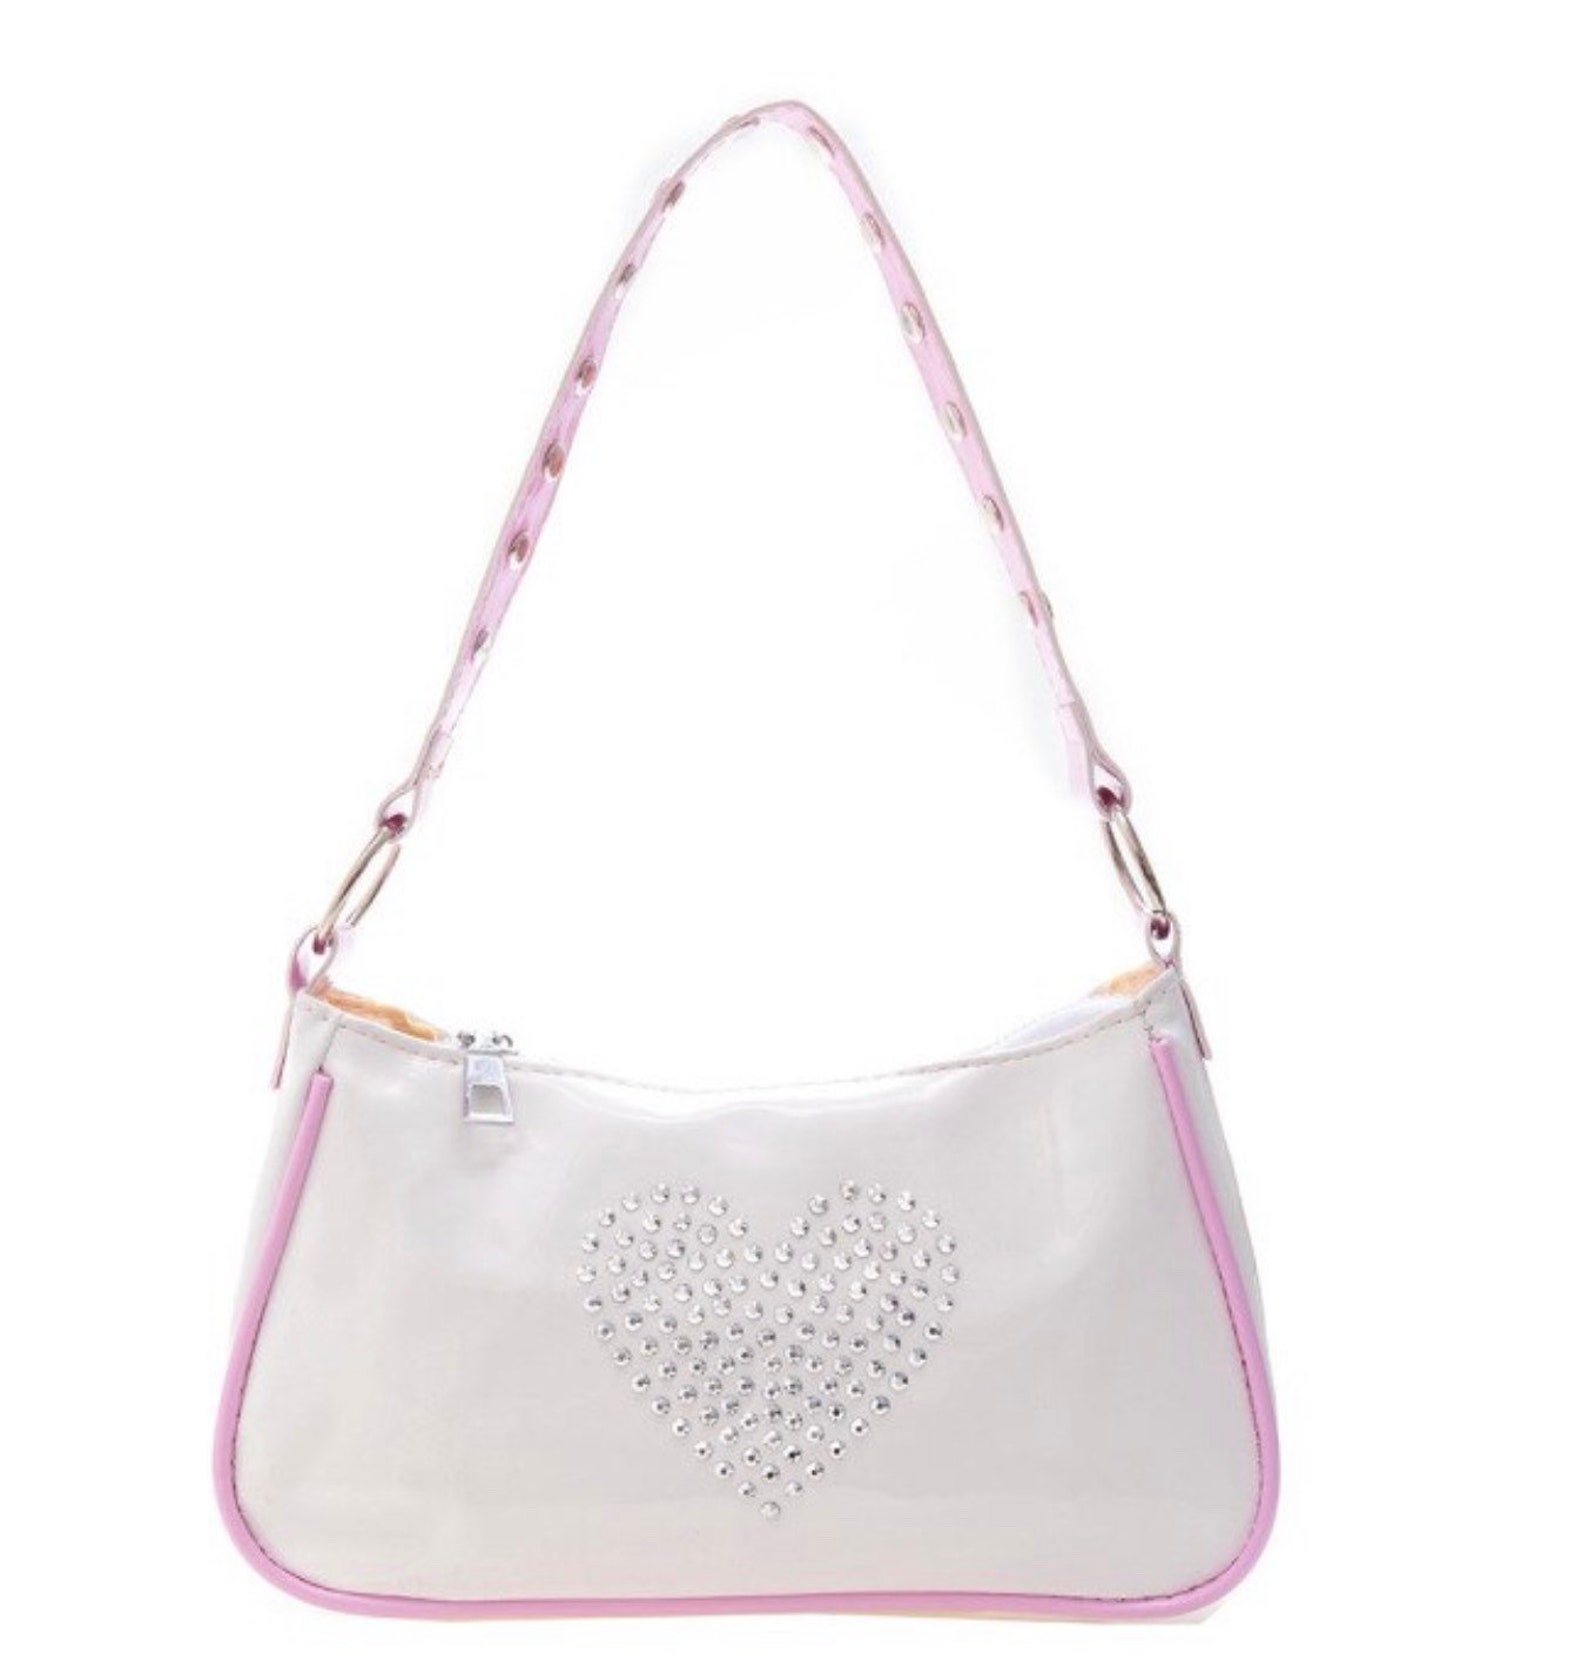 Stud rhinestone Heart Shoulder Bag y2k purse pink/white/black | Etsy